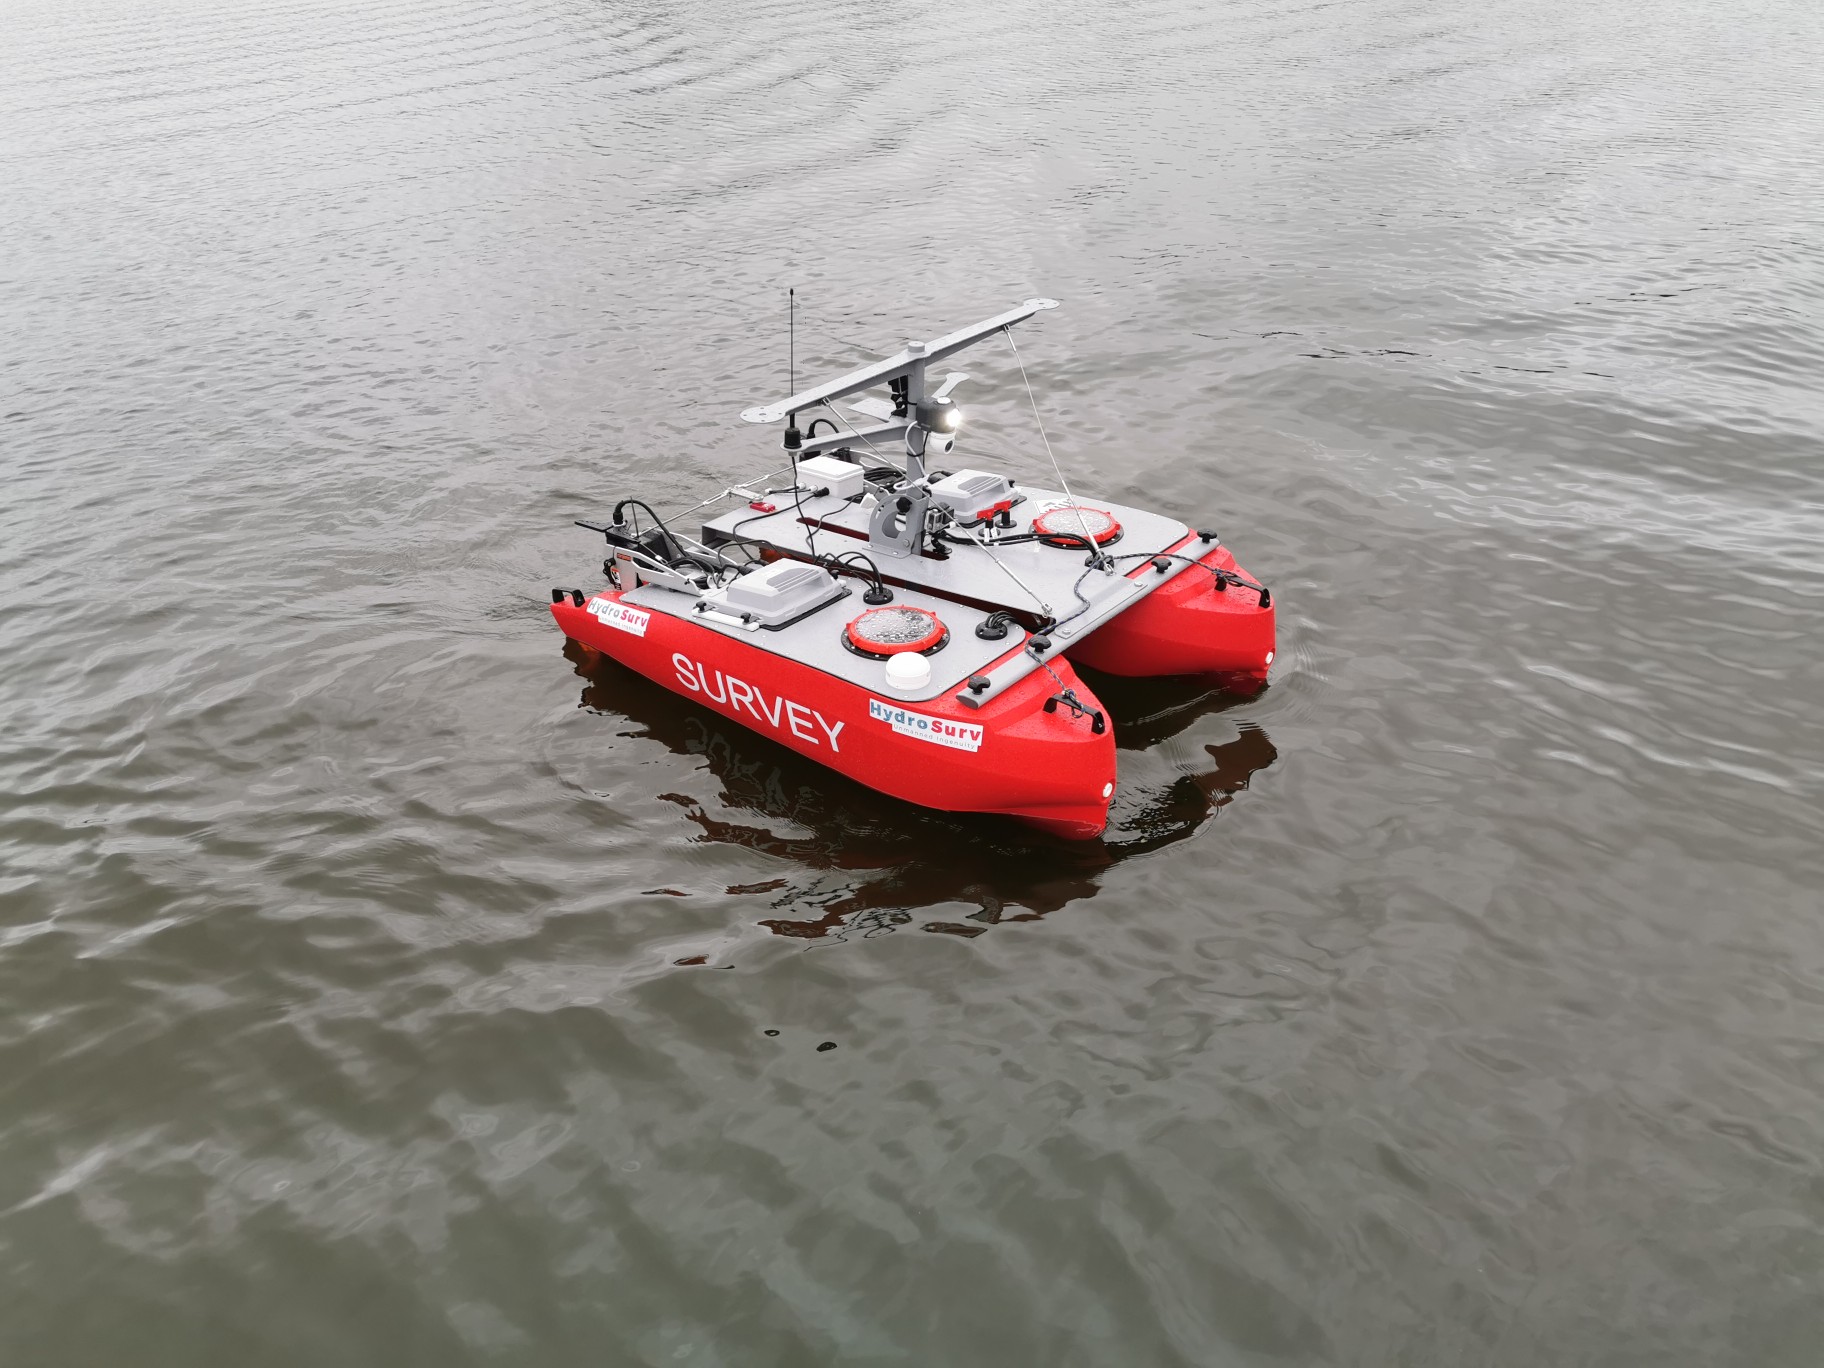 Medium unmanned surface vehicle on the sea